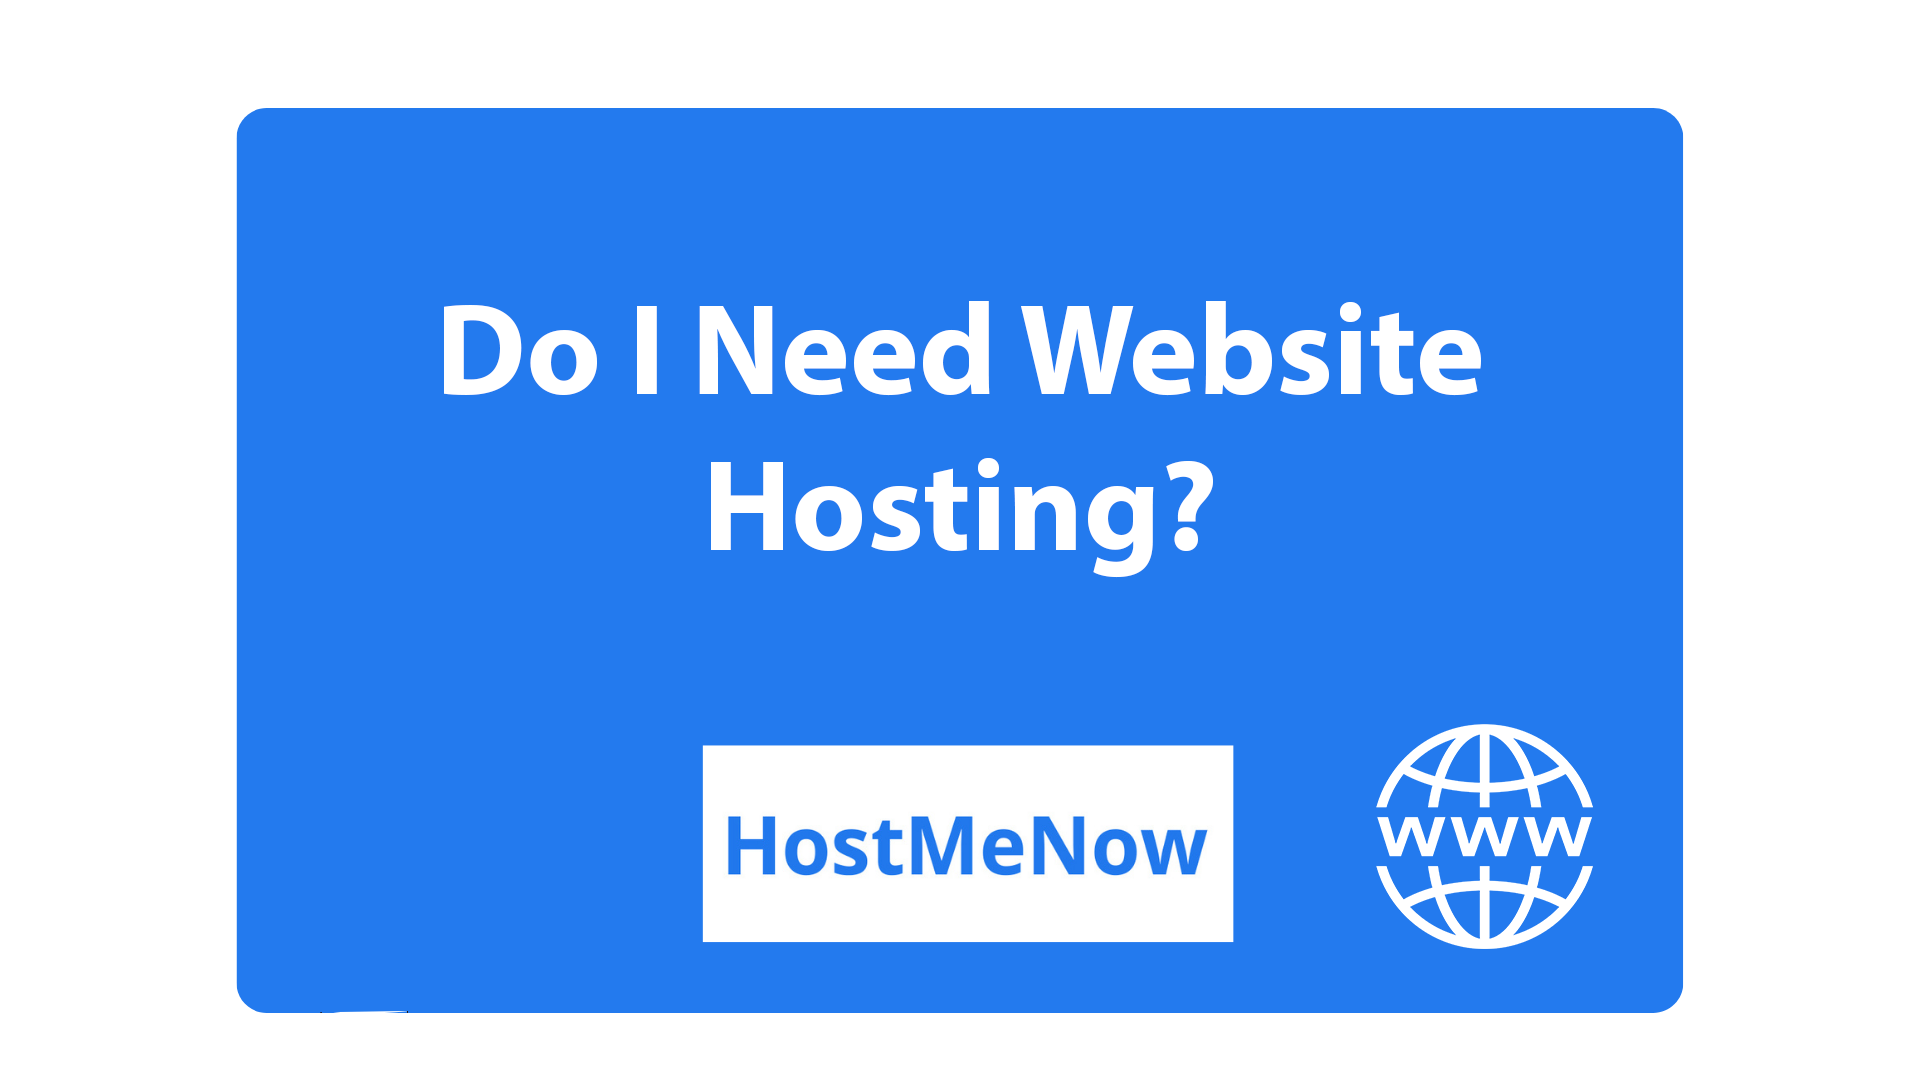 Benötige ich Website-Hosting?